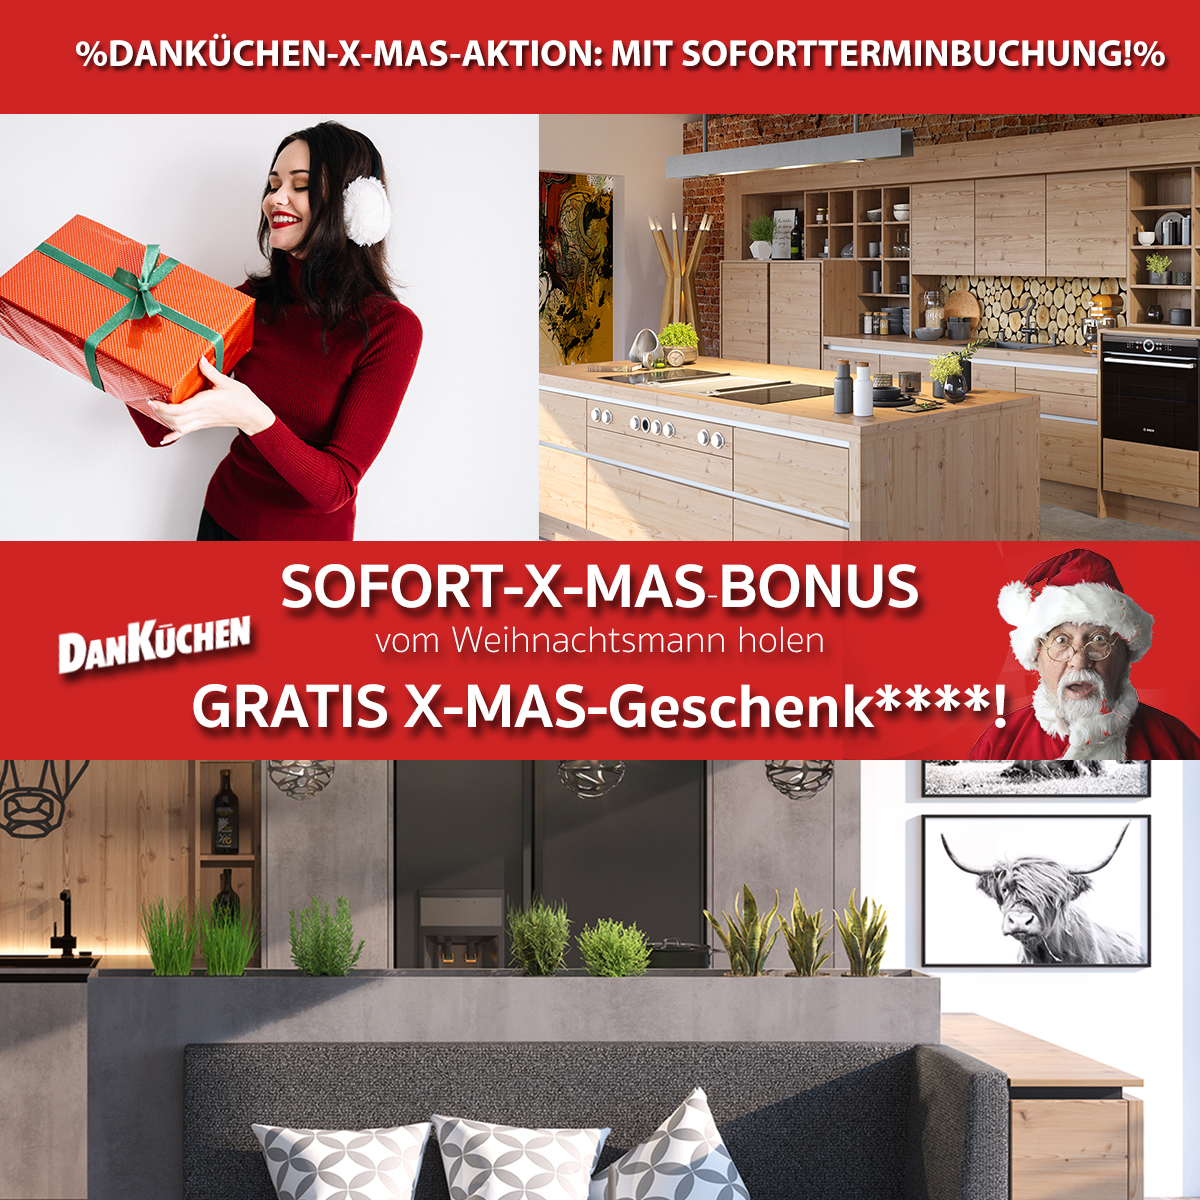 rodrix-dan-kuechen-fb-kampagne-soforttermin-x-mas-bonus-geschenk